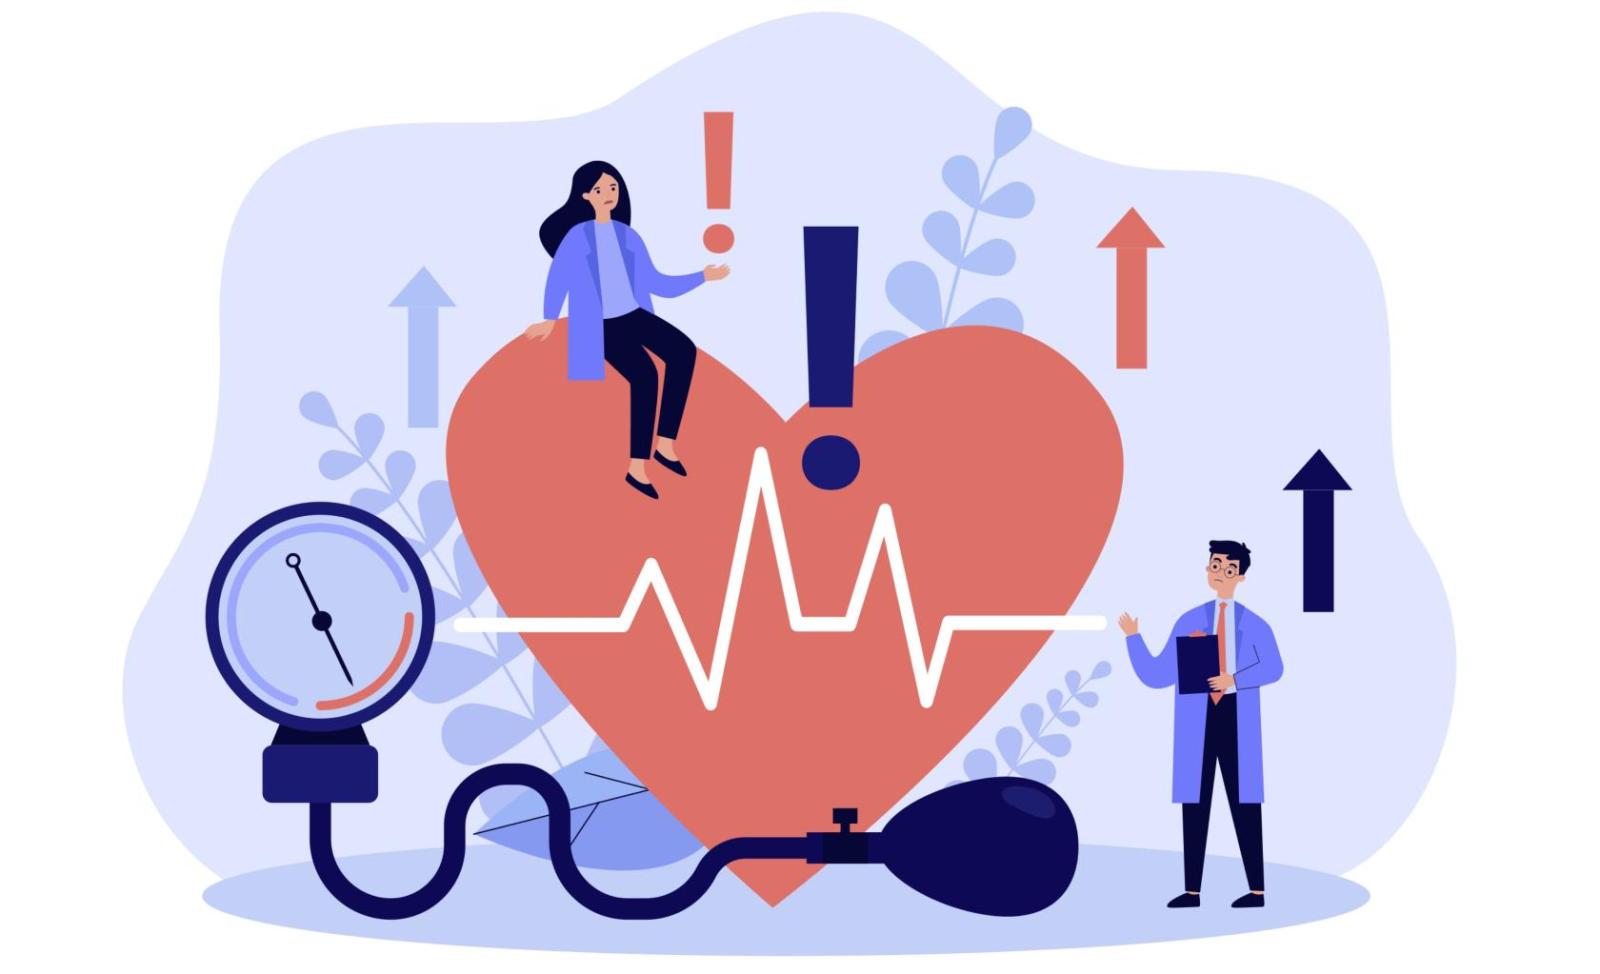 An illustration of heart health